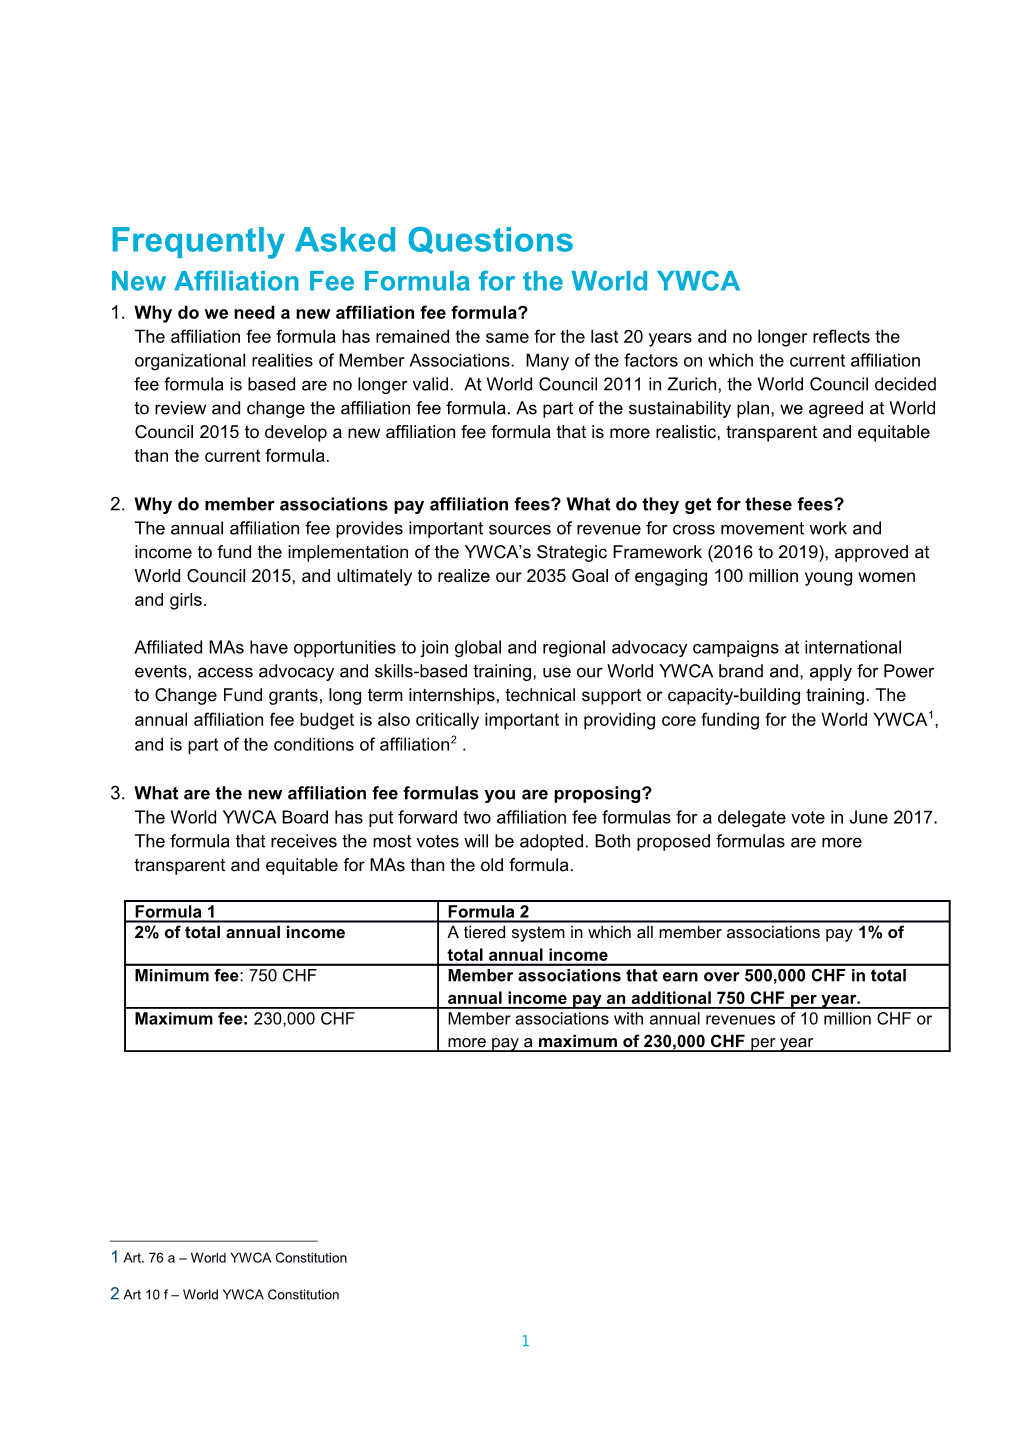 New Affiliation Fee Formula for the World YWCA